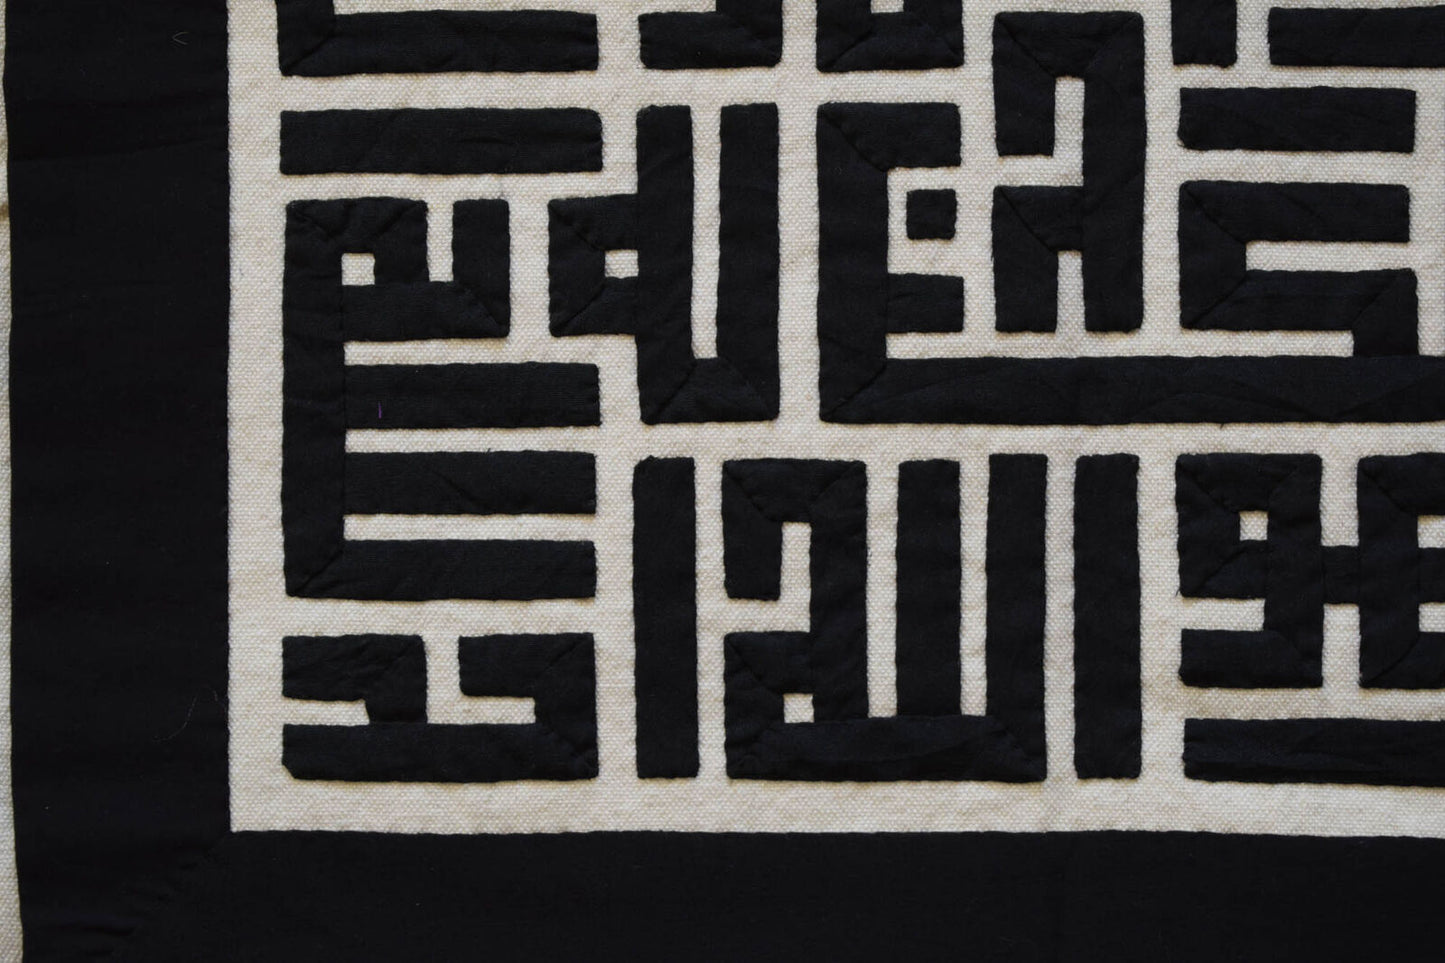 Patchwork Islamic Koran Quran-Handmade Quilt wall hanging/kufic script-Egyptian